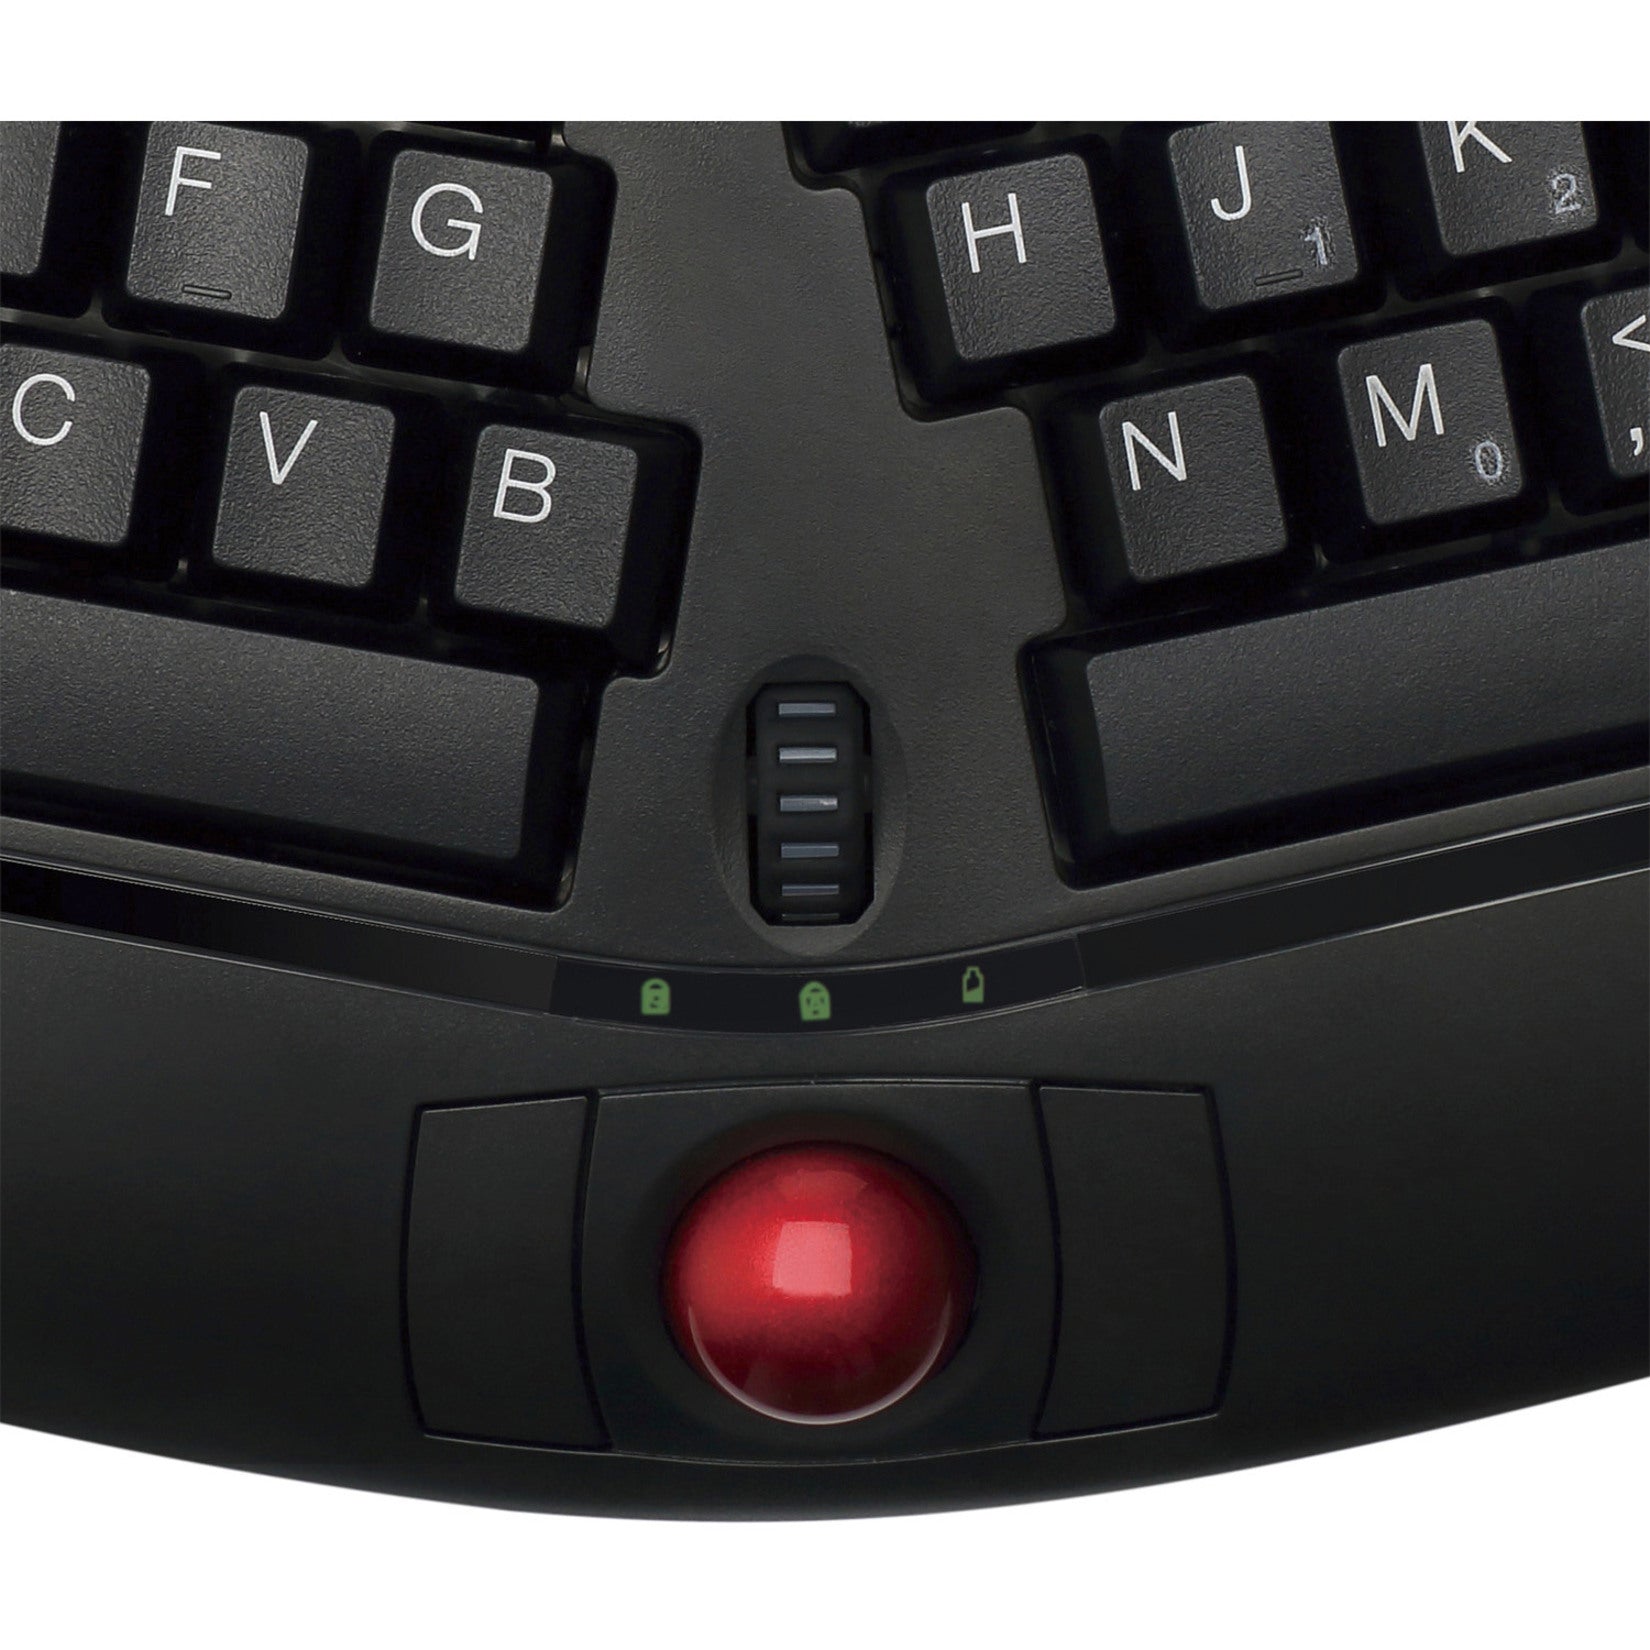 Adesso WKB-3150UB Tru-Form Media 3150 Wireless Ergo Trackball Keyboard 2.4 GHz Split Layout Palm Rest  아데소 WKB-3150UB 트루-폼 미디어 3150 무선 에르고 트랙볼 키보드 2.4 GHz 분리 레이아웃 팜 레스트